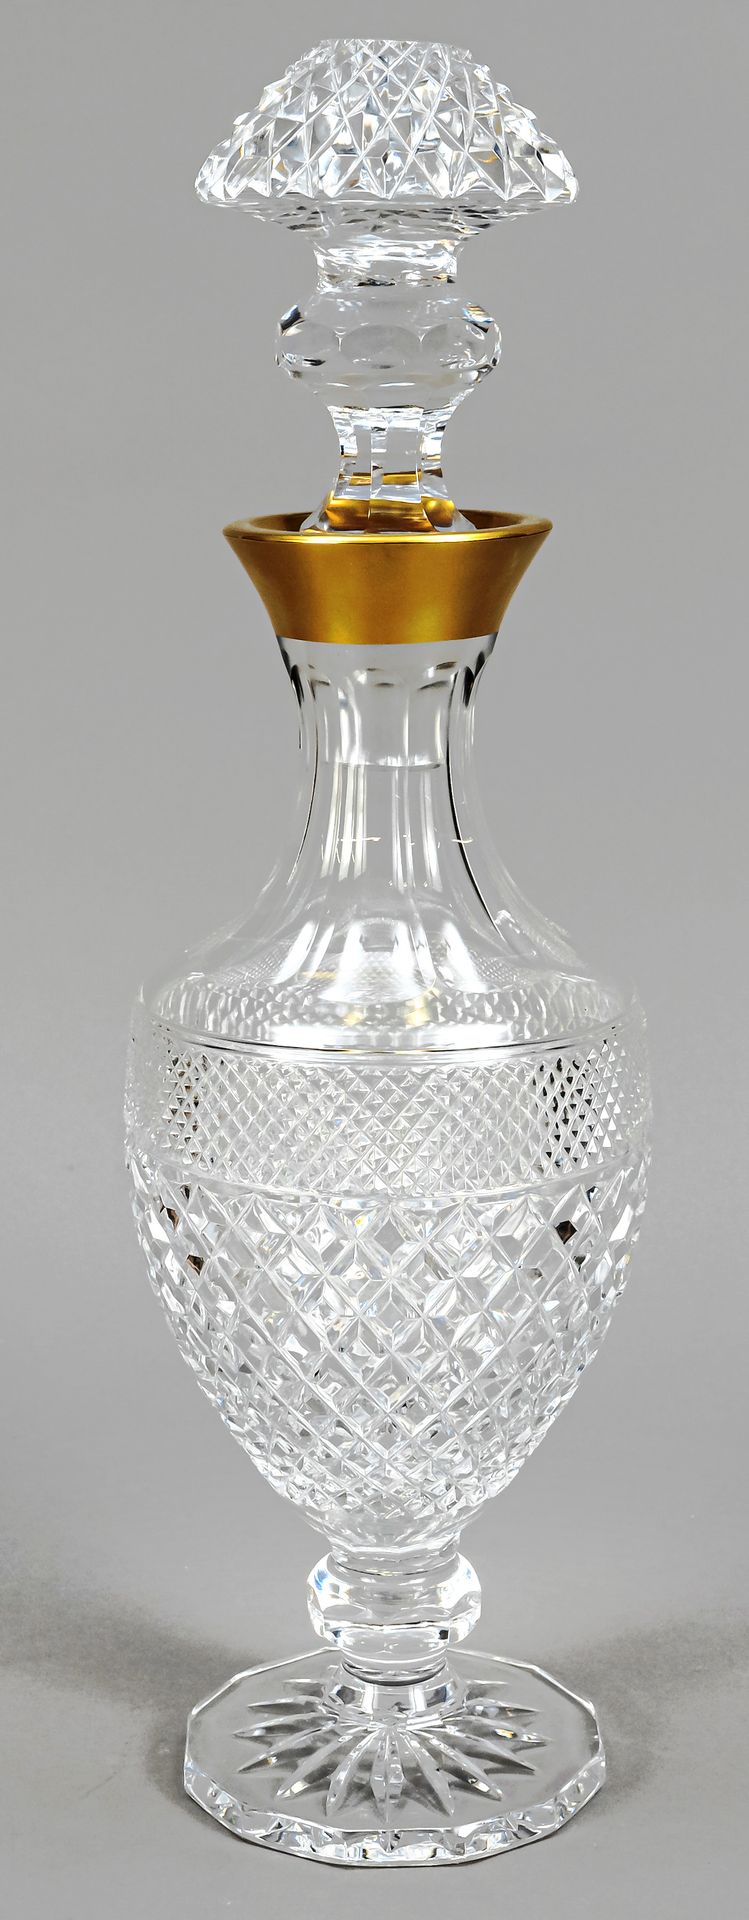 Null 大酒杯，20世纪，多角形支架，短轴与结点，椭圆形杯身，大圆珠形瓶塞，透明玻璃，有丰富的切割装饰和宽金边，高38.5厘米